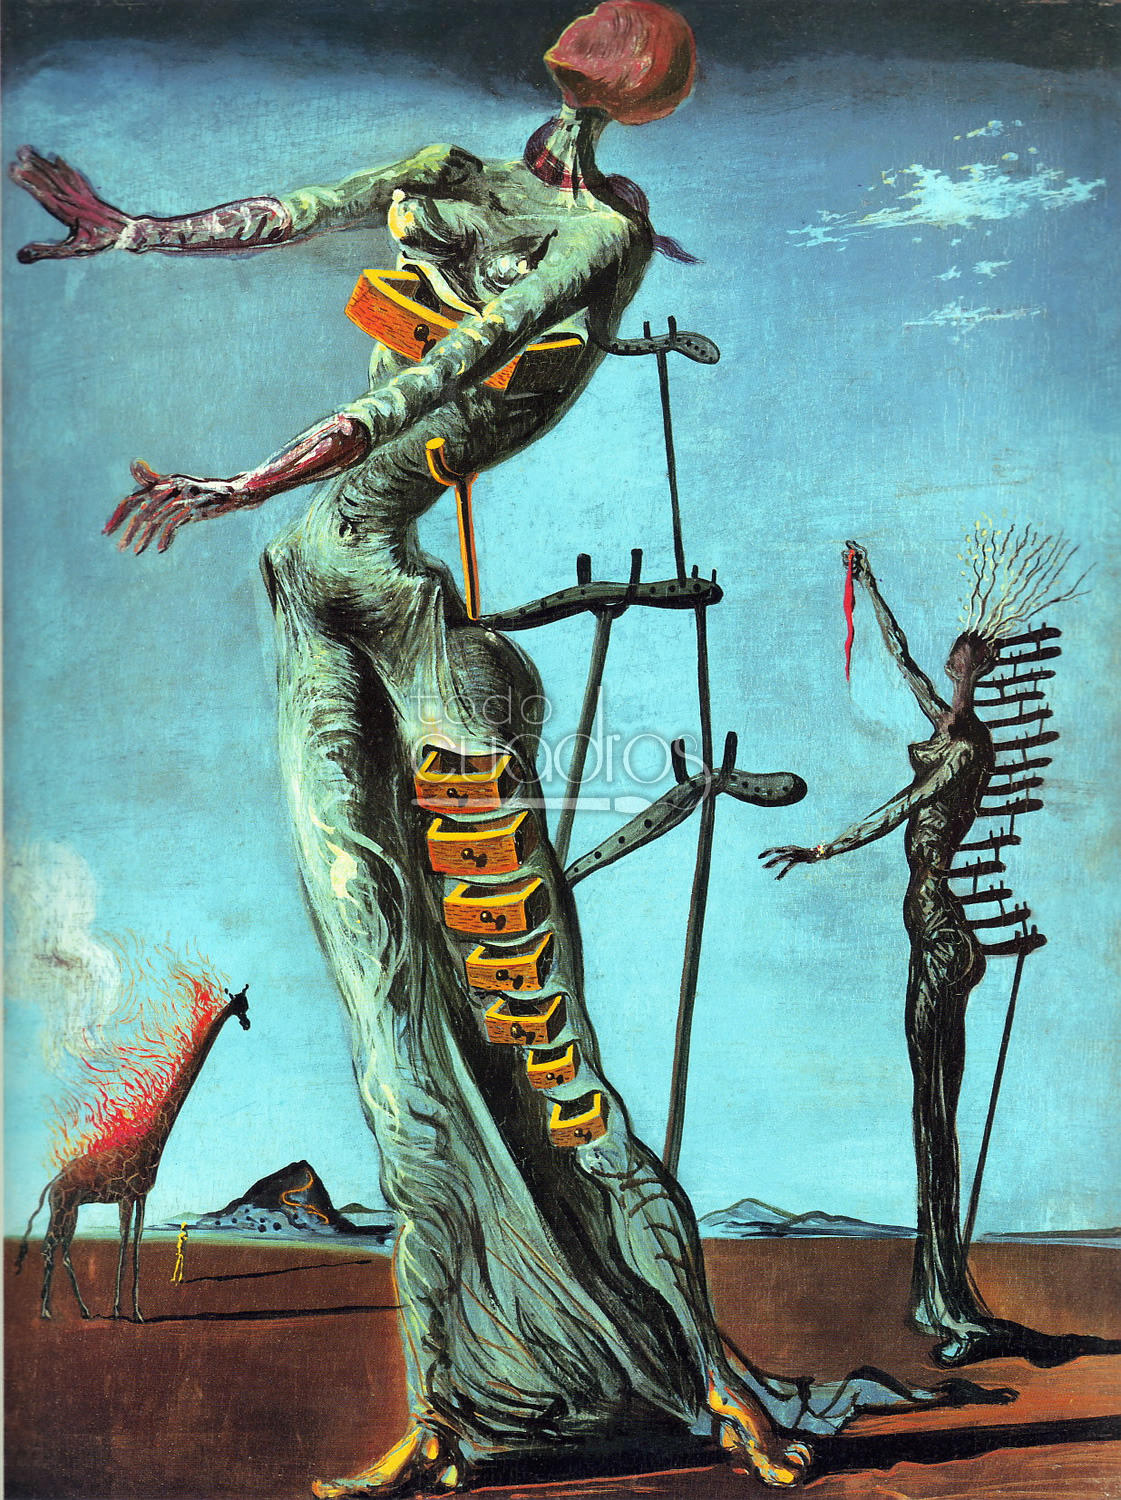 La jirafa en llamas", cuadro Salvador Dalí, obra óleo.